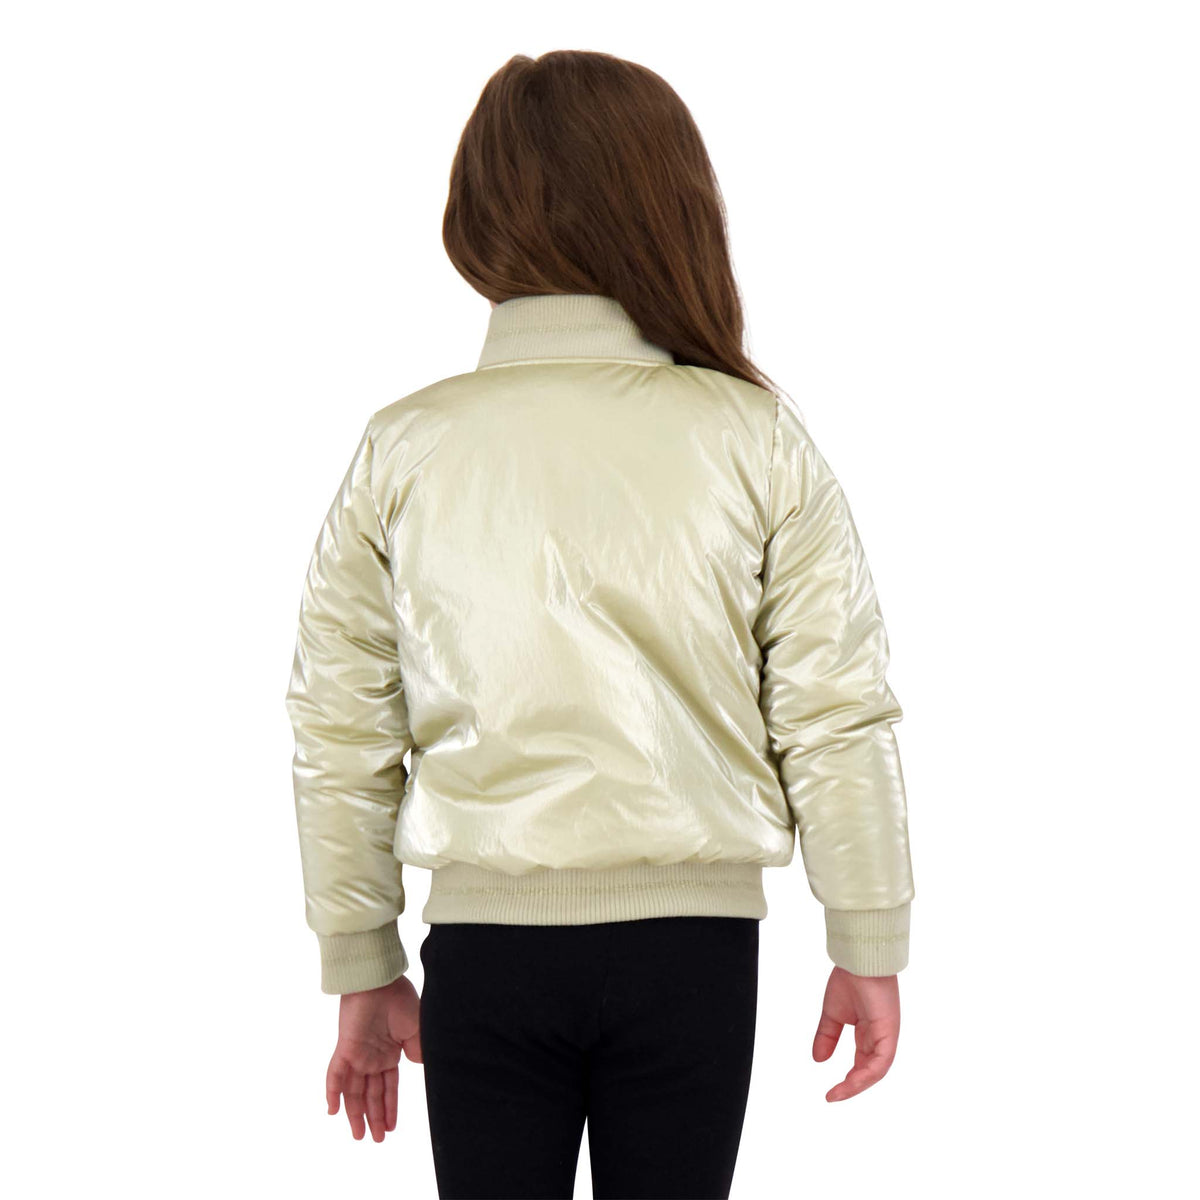 New Women Girls Long Sleeve Front Zip Up Bomber jacket Classic Outwear Size8-16 